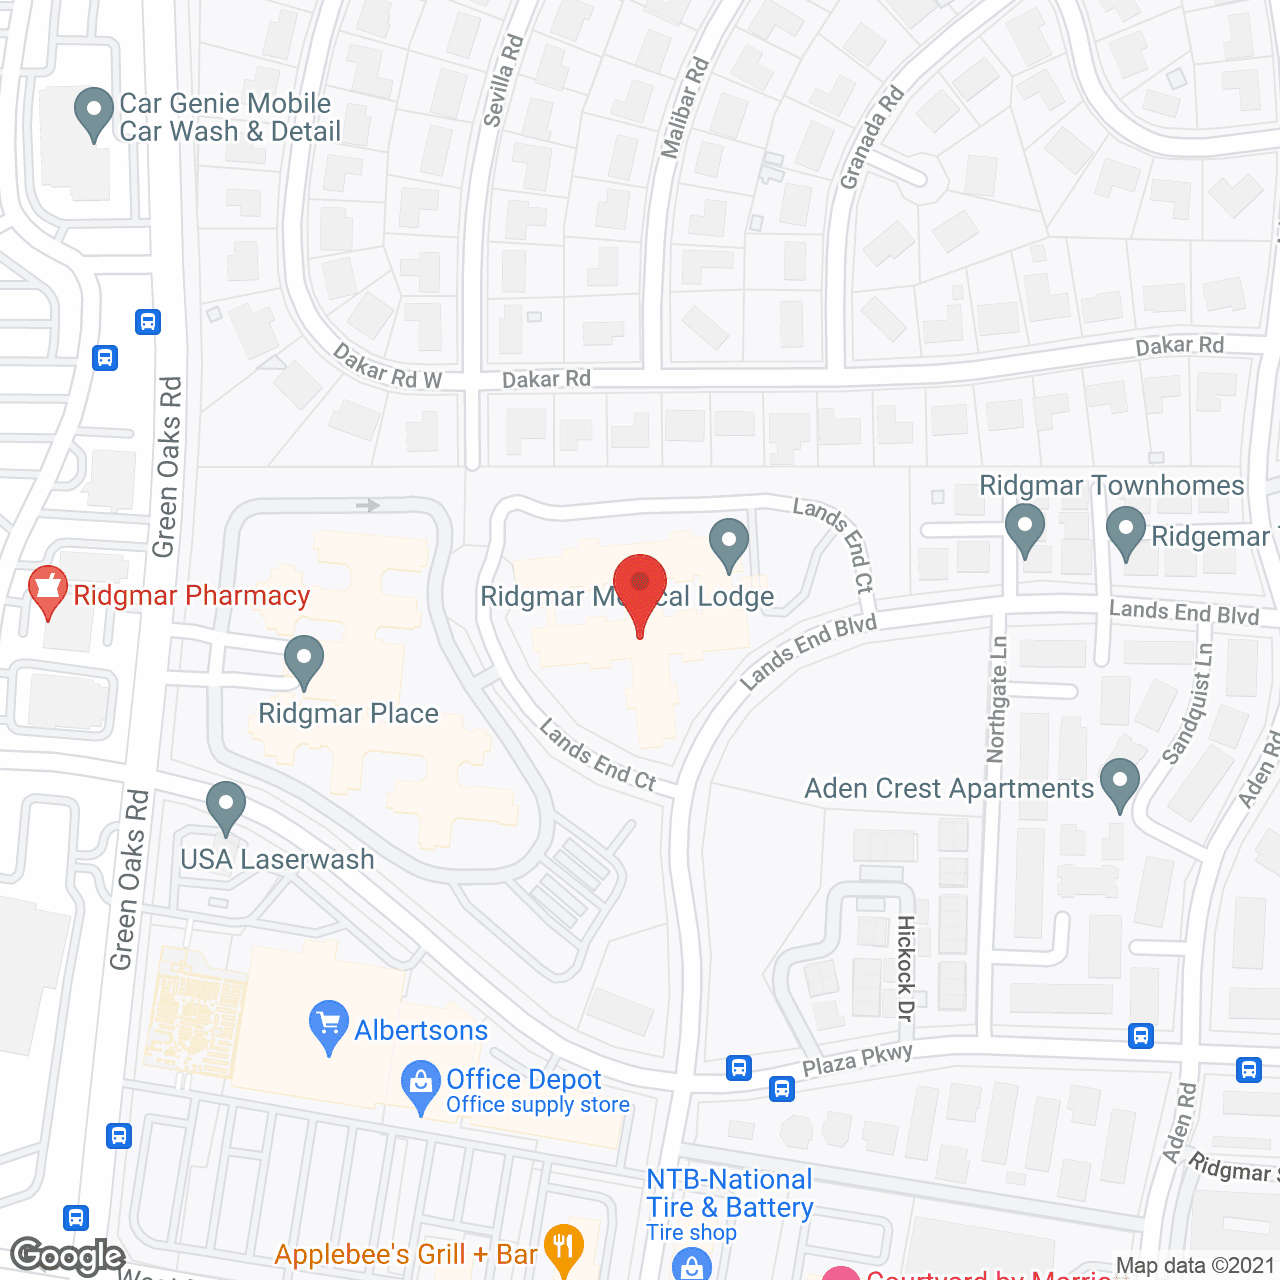 Ridgmar Medical Lodge in google map